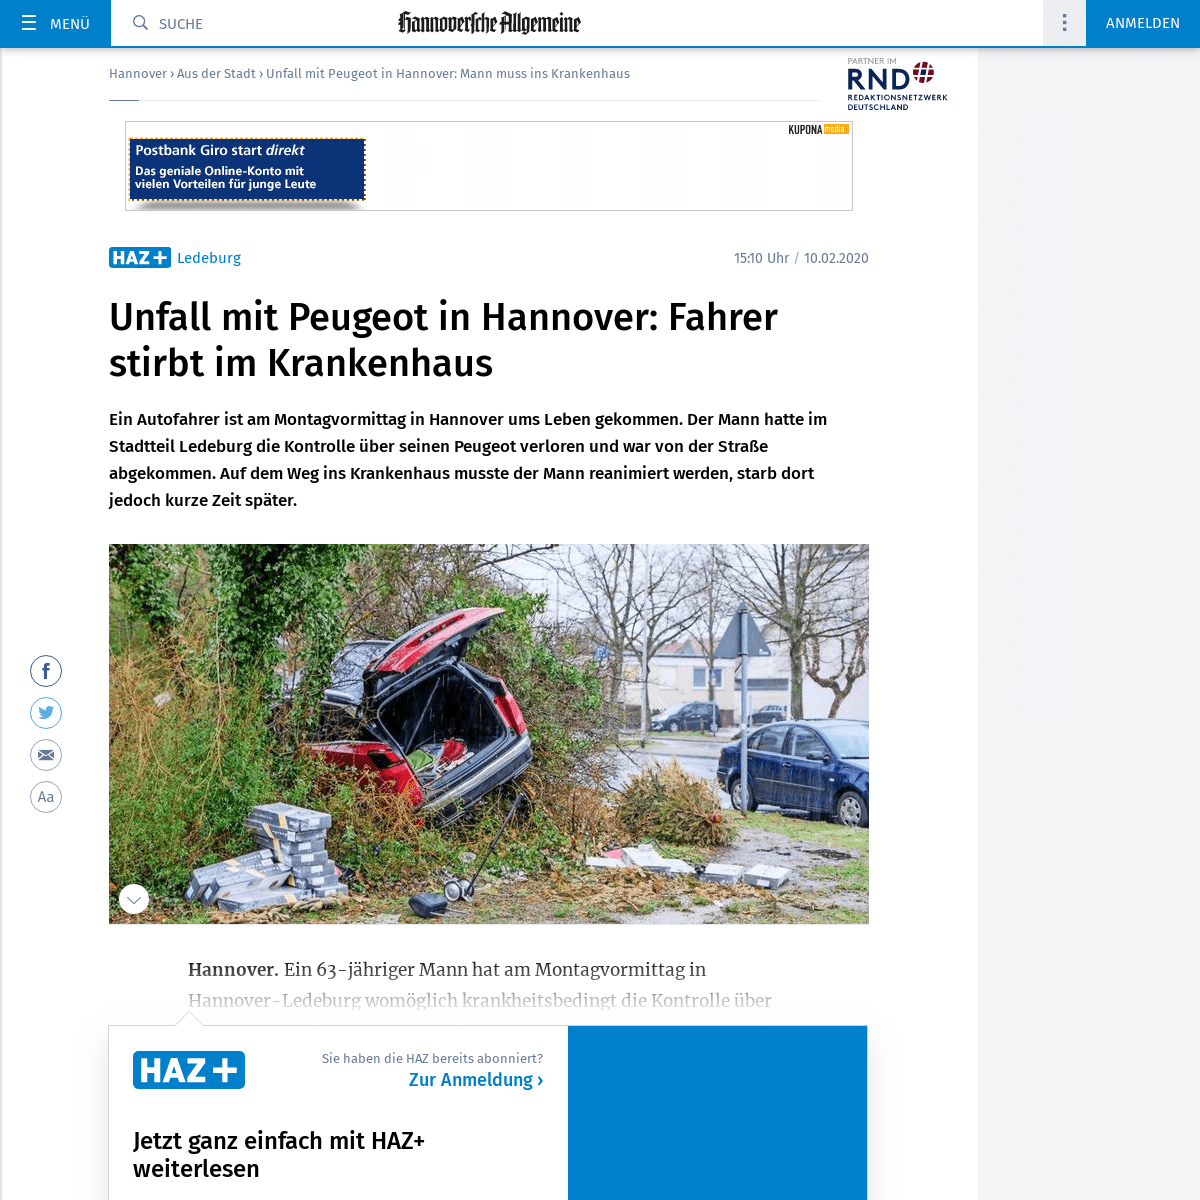 A complete backup of www.haz.de/Hannover/Aus-der-Stadt/Unfall-mit-Peugeot-in-Hannover-Mann-muss-ins-Krankenhaus